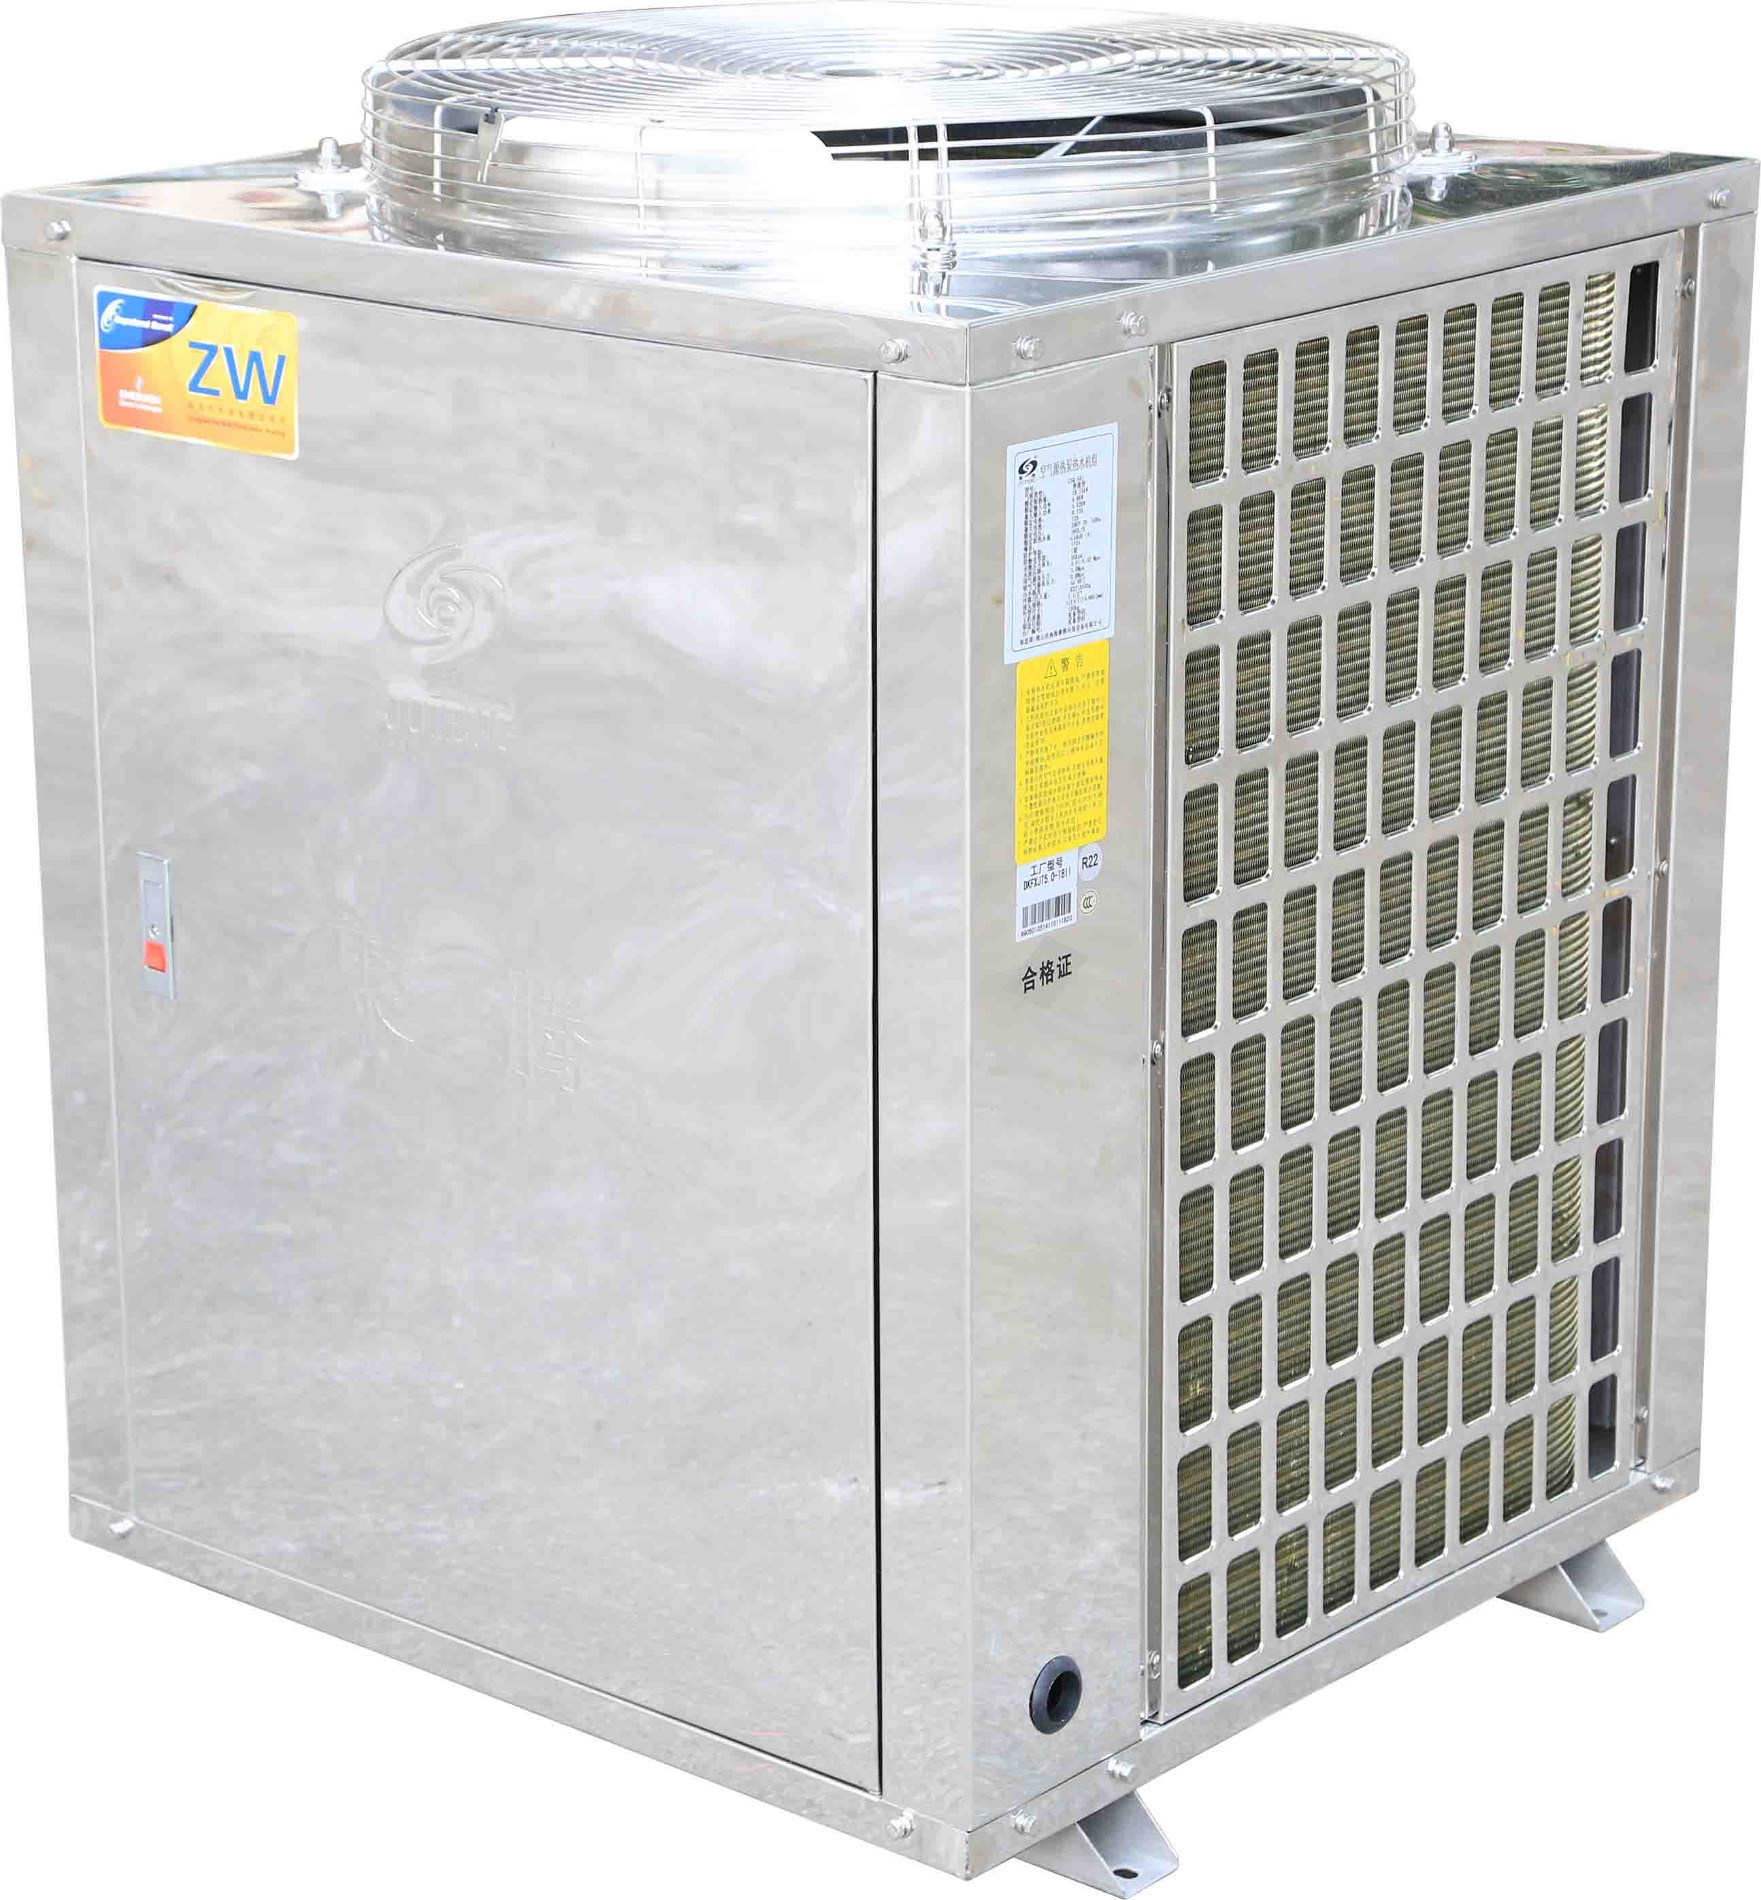 High quality energy saving techology  Low Temp Heater Quotes,China heat pump equipment Low Temp Heater Factory, pump equipmentLow Temp Heater Purchasing